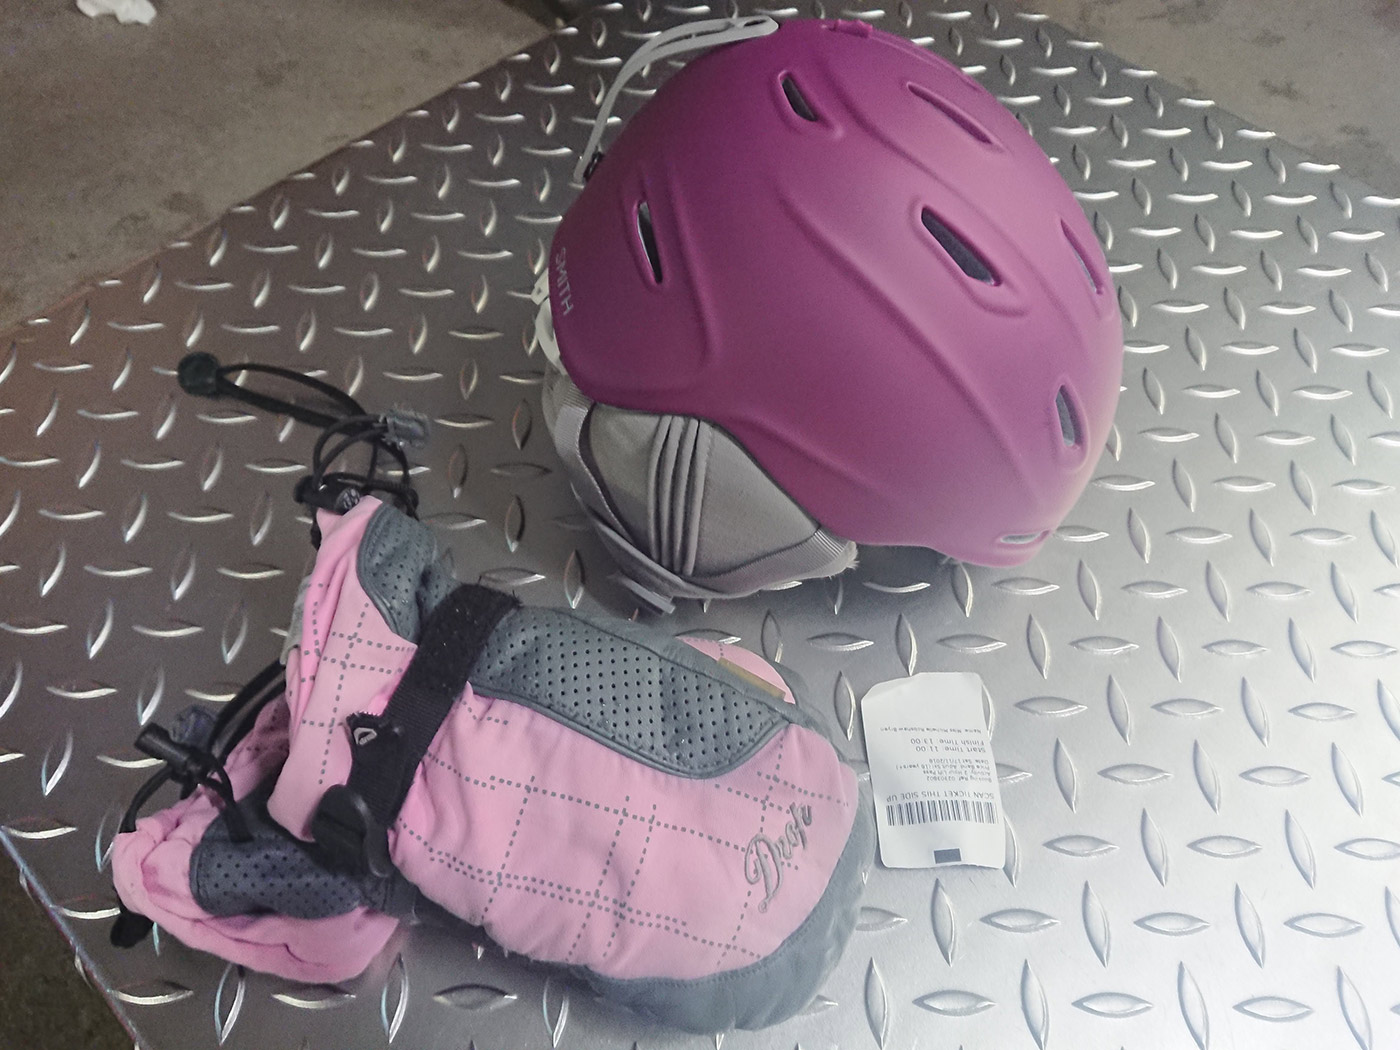 Smith Optics Womens Arrival Helmet in Matte Grape